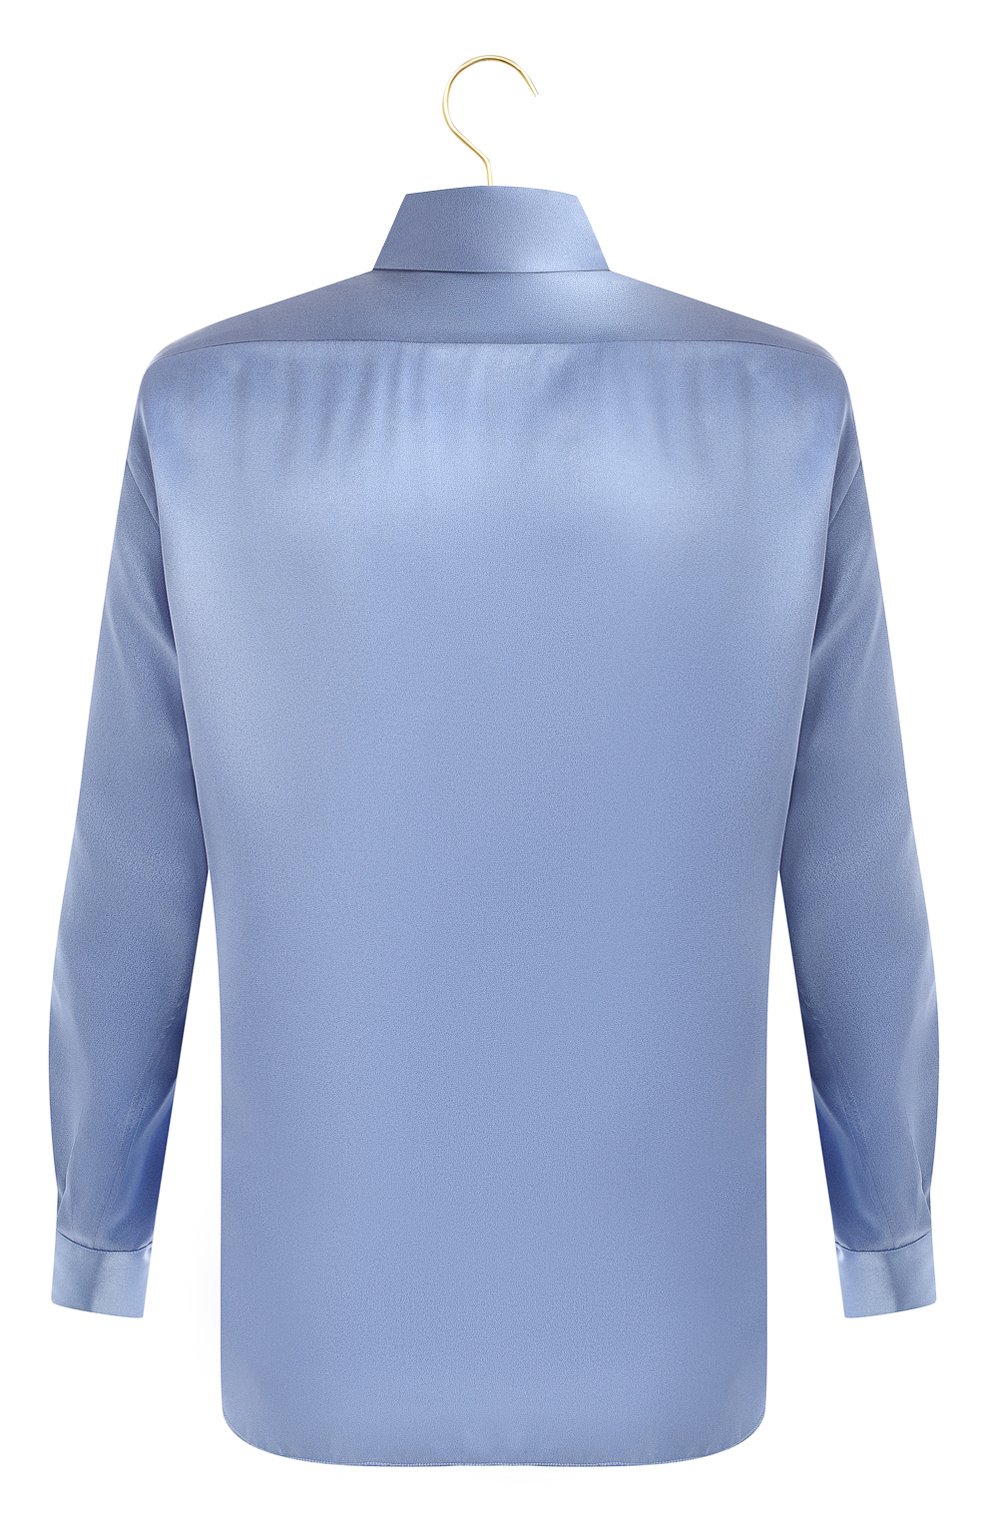 Шелковая рубашка | Zilli | Голубой - 2